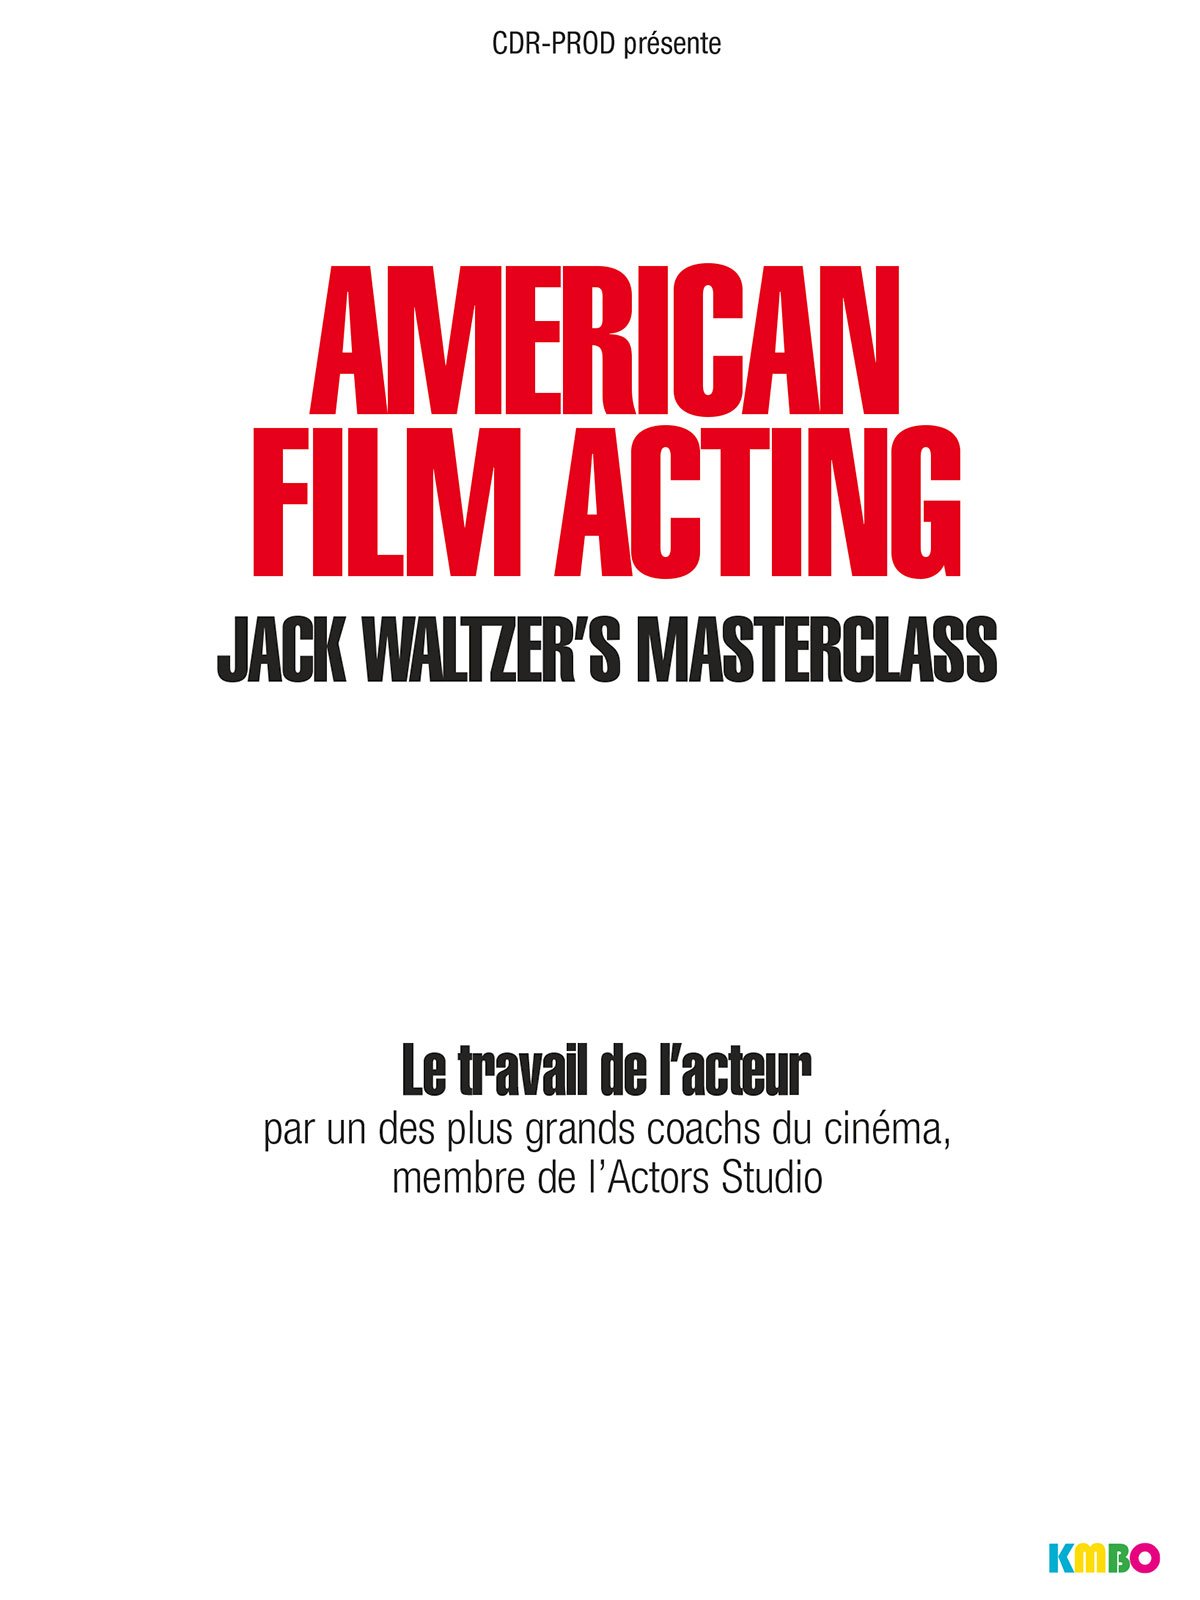 American Film Acting : La masterclass de Jack Waltzer : Affiche